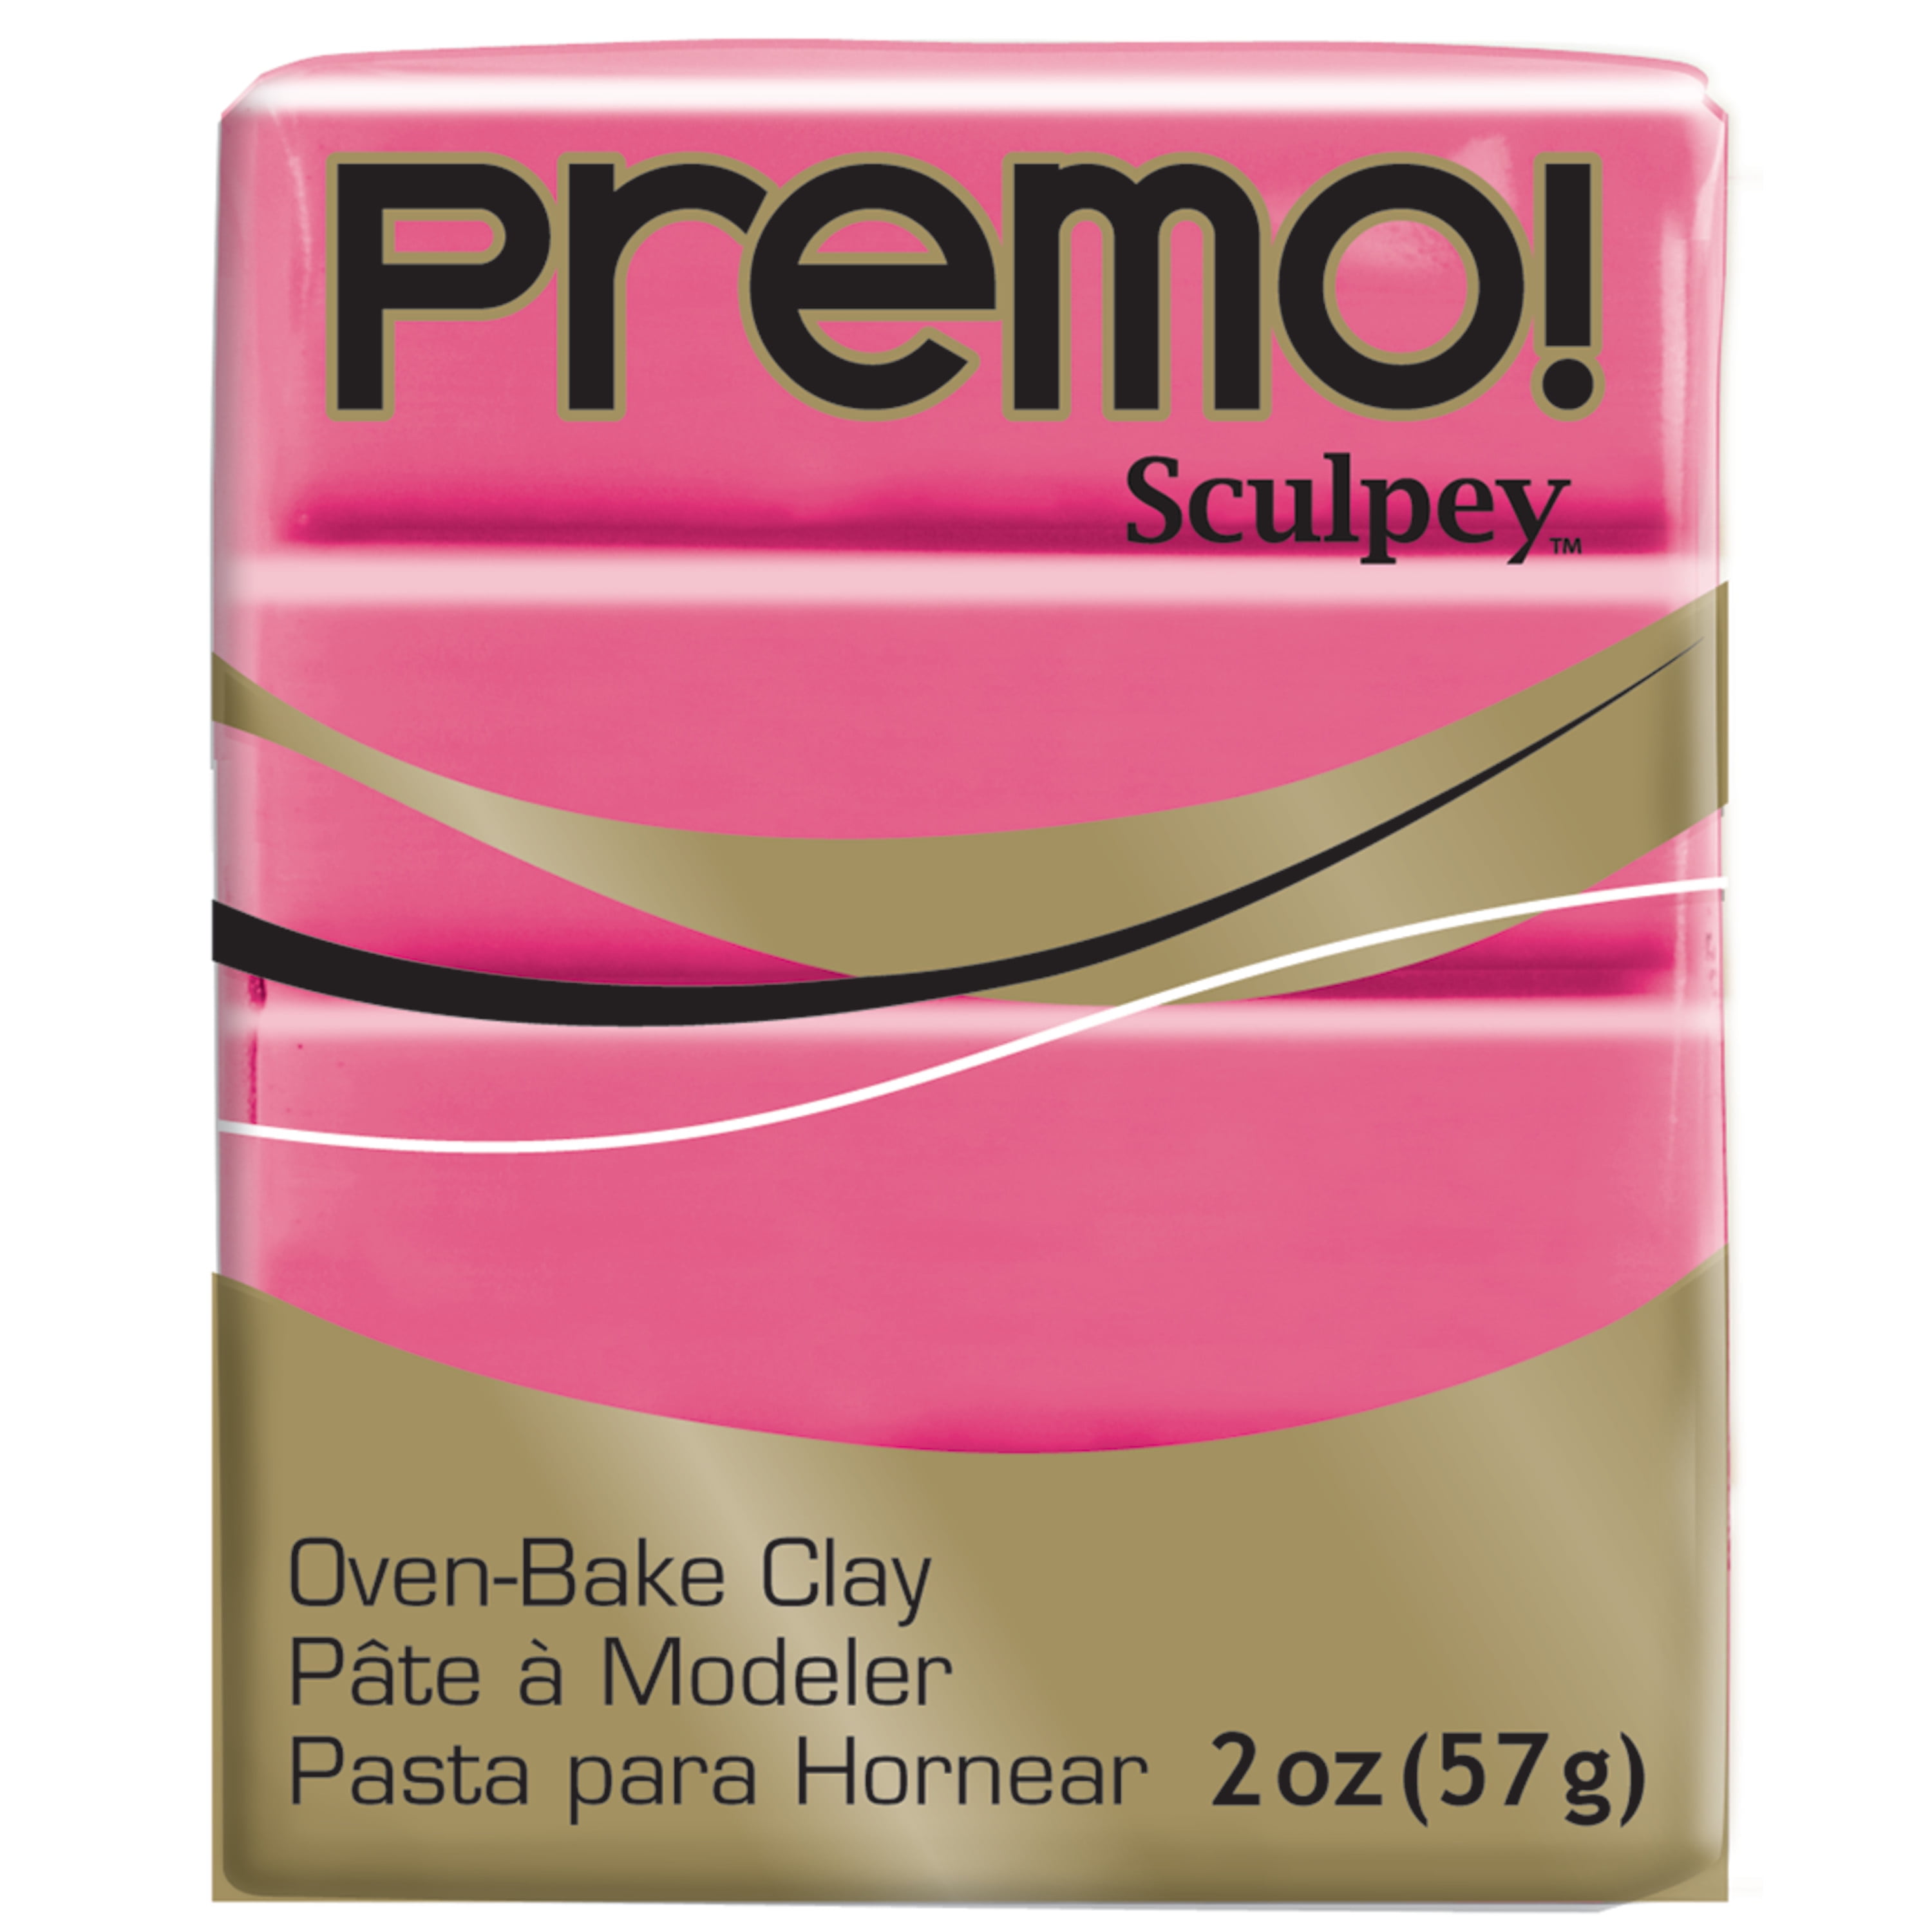 Premo! Sculpey Modeling Clay, 2 oz., Blush 